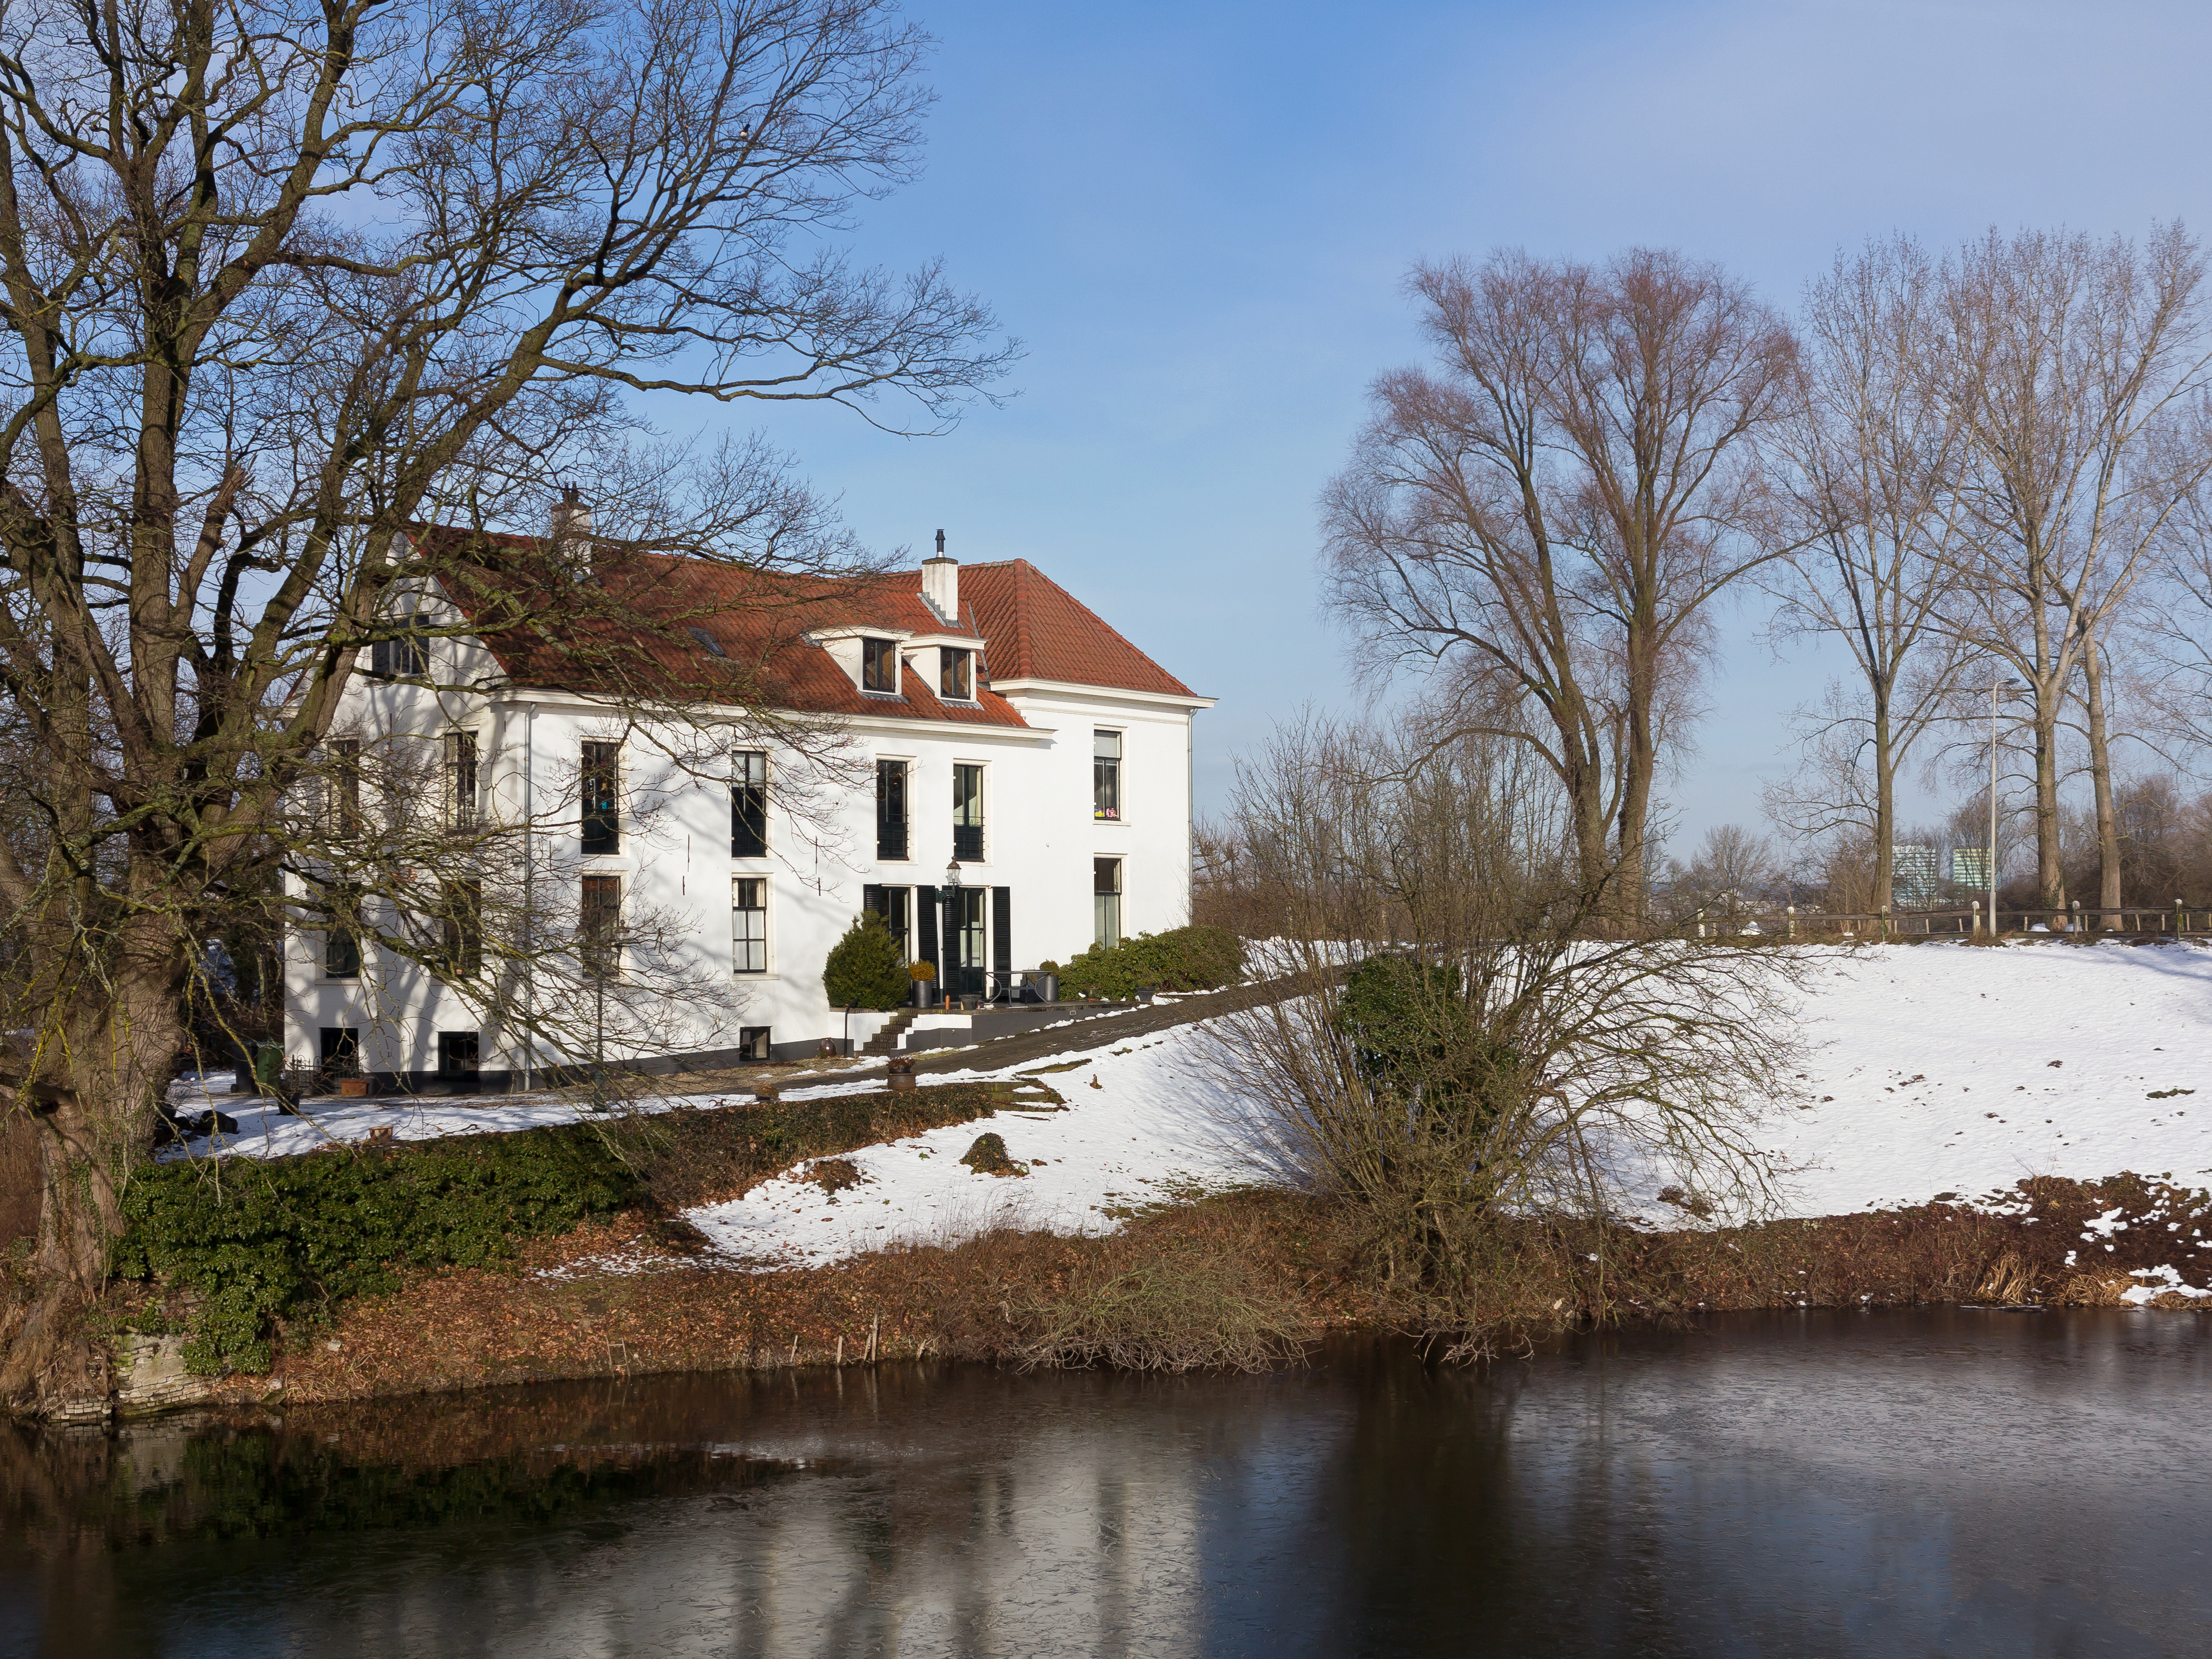 Arnhem-Elden, monumentaal woonhuis GM022WN0440 met sneeuw foto1 2017-01-15 12.50